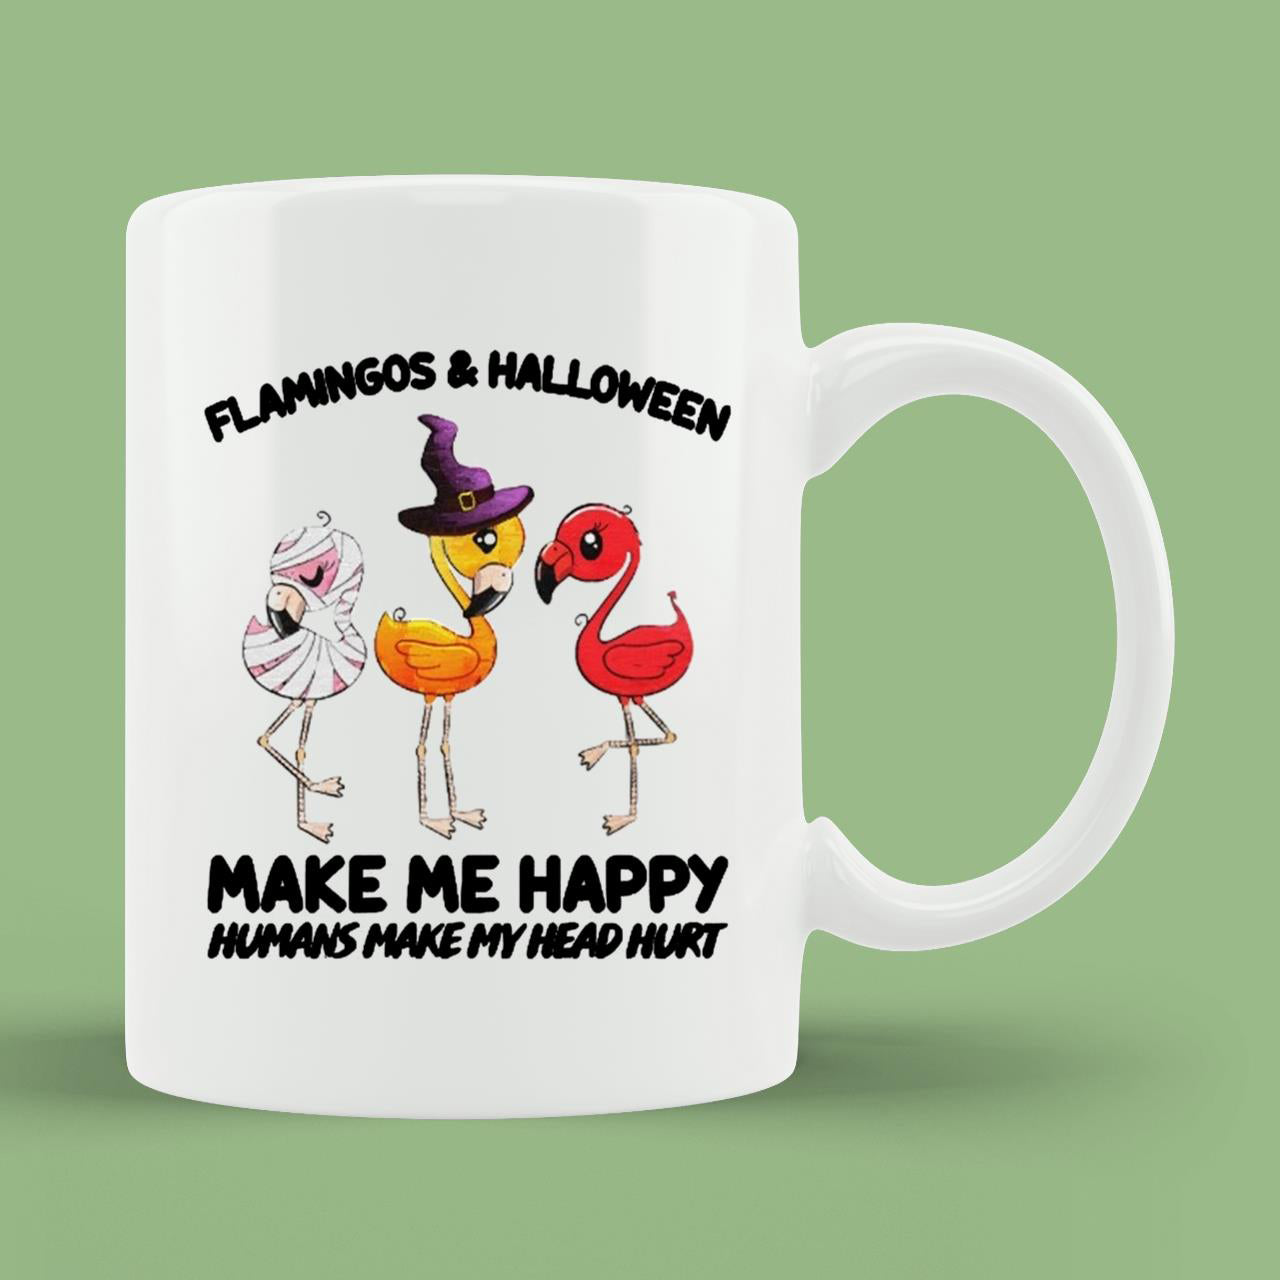 Skitongift Spooky Ceramic Novelty Coffee Mug Flamingo Halloween Mug